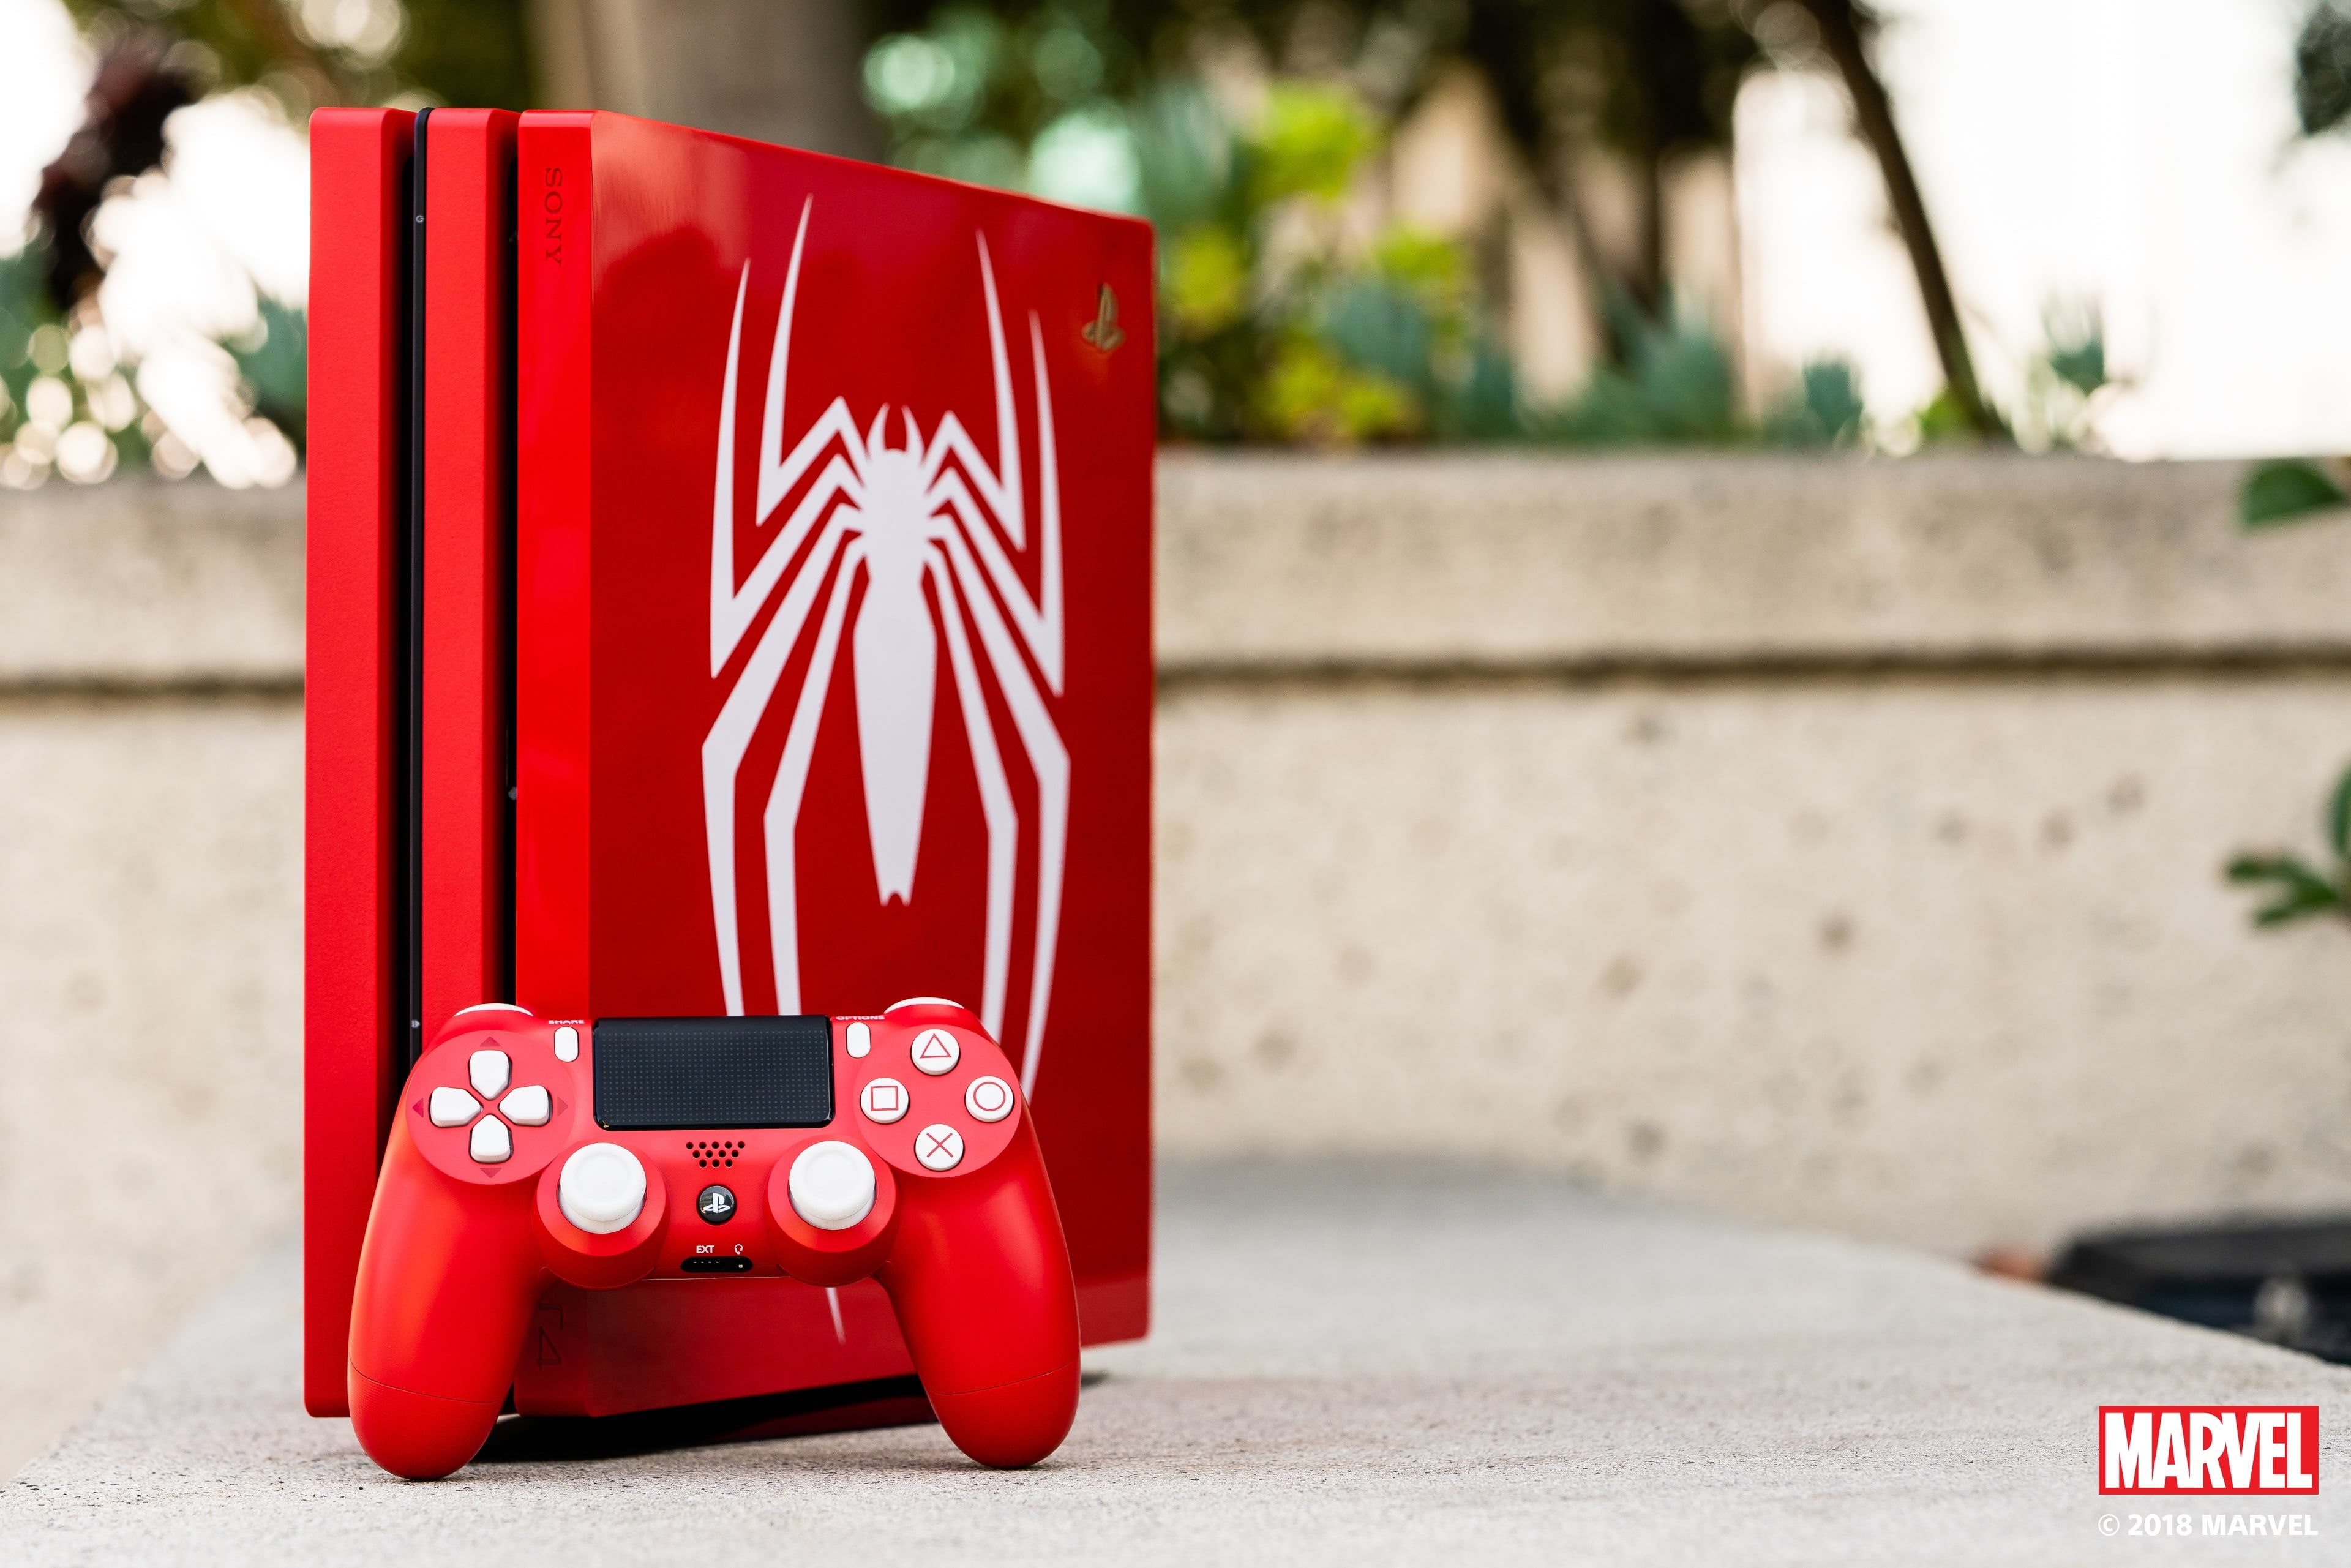 Marvel s Spider Man Limited Edition PS4 Pro Bundle Gets Stunning